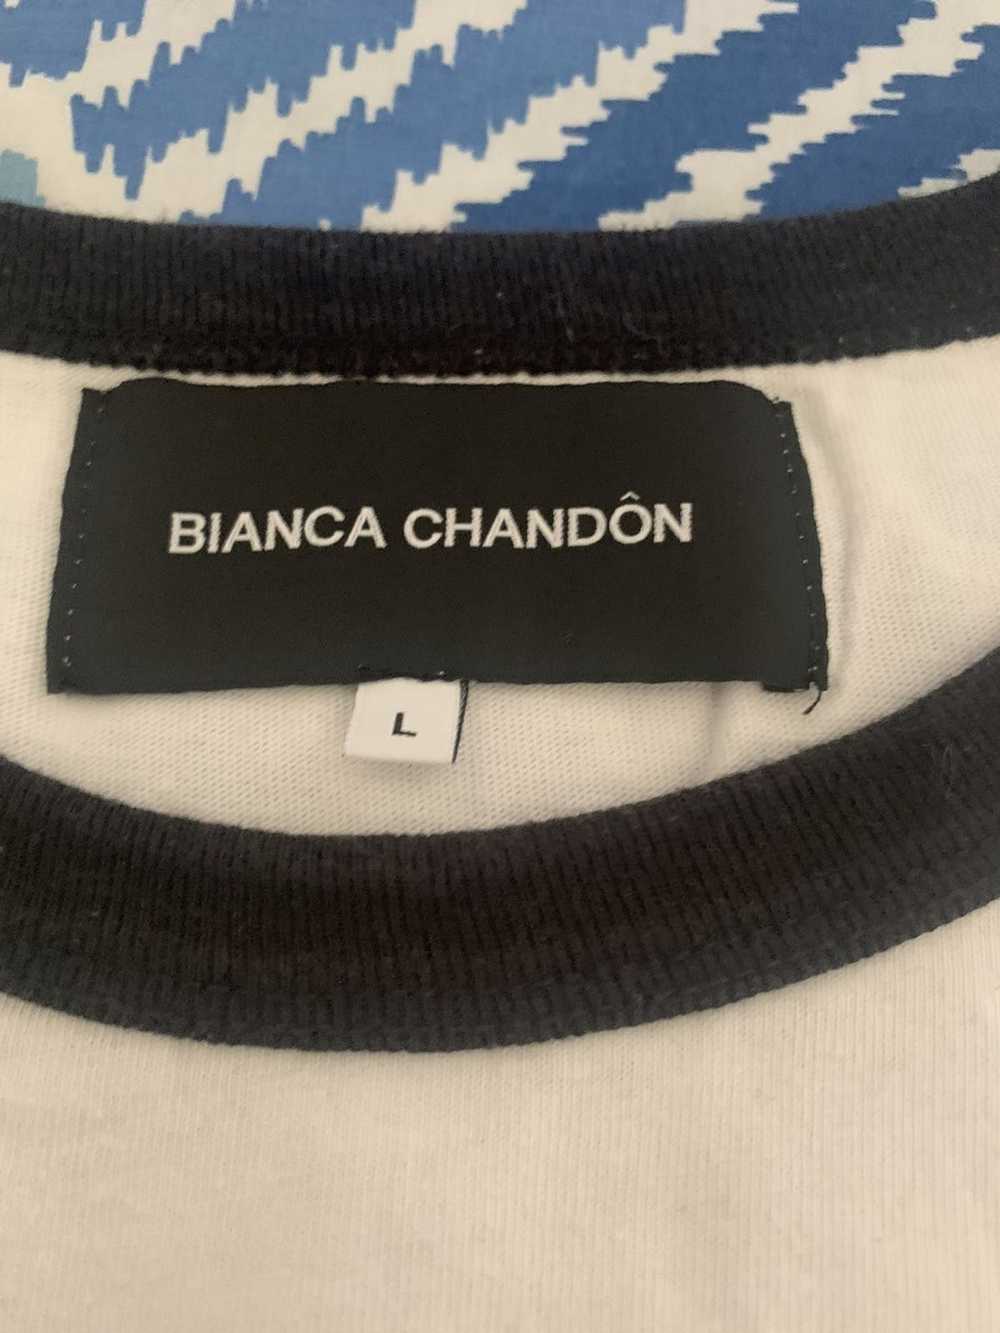 Bianca Chandon Bianca Chandon Big Lover Tee - image 2